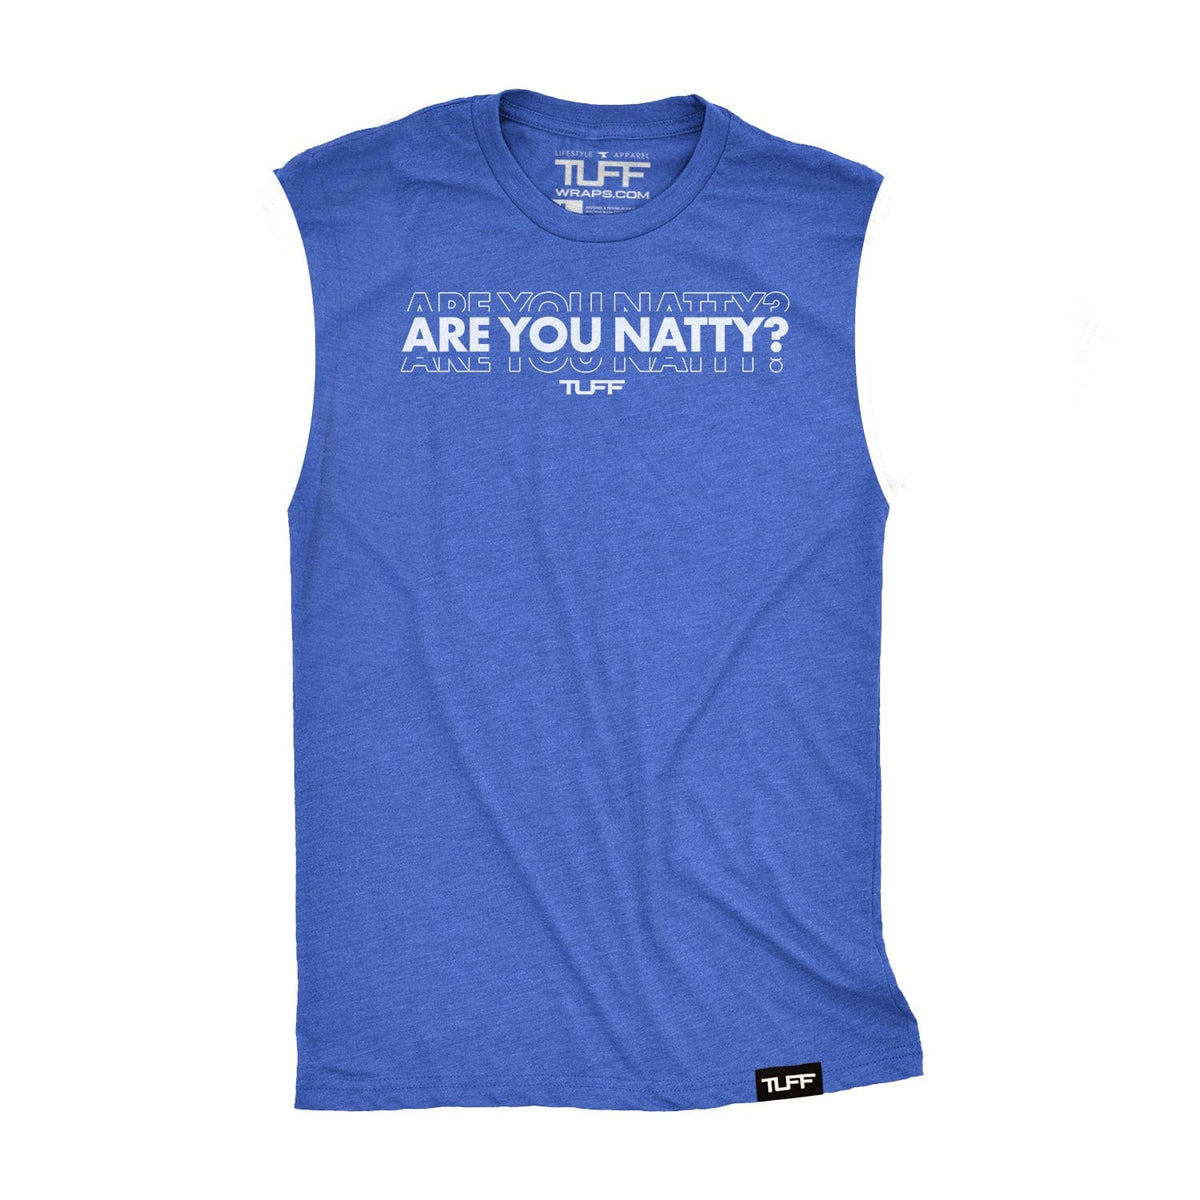 Are You Natty Raw Edge Muscle Tank TuffWraps.com